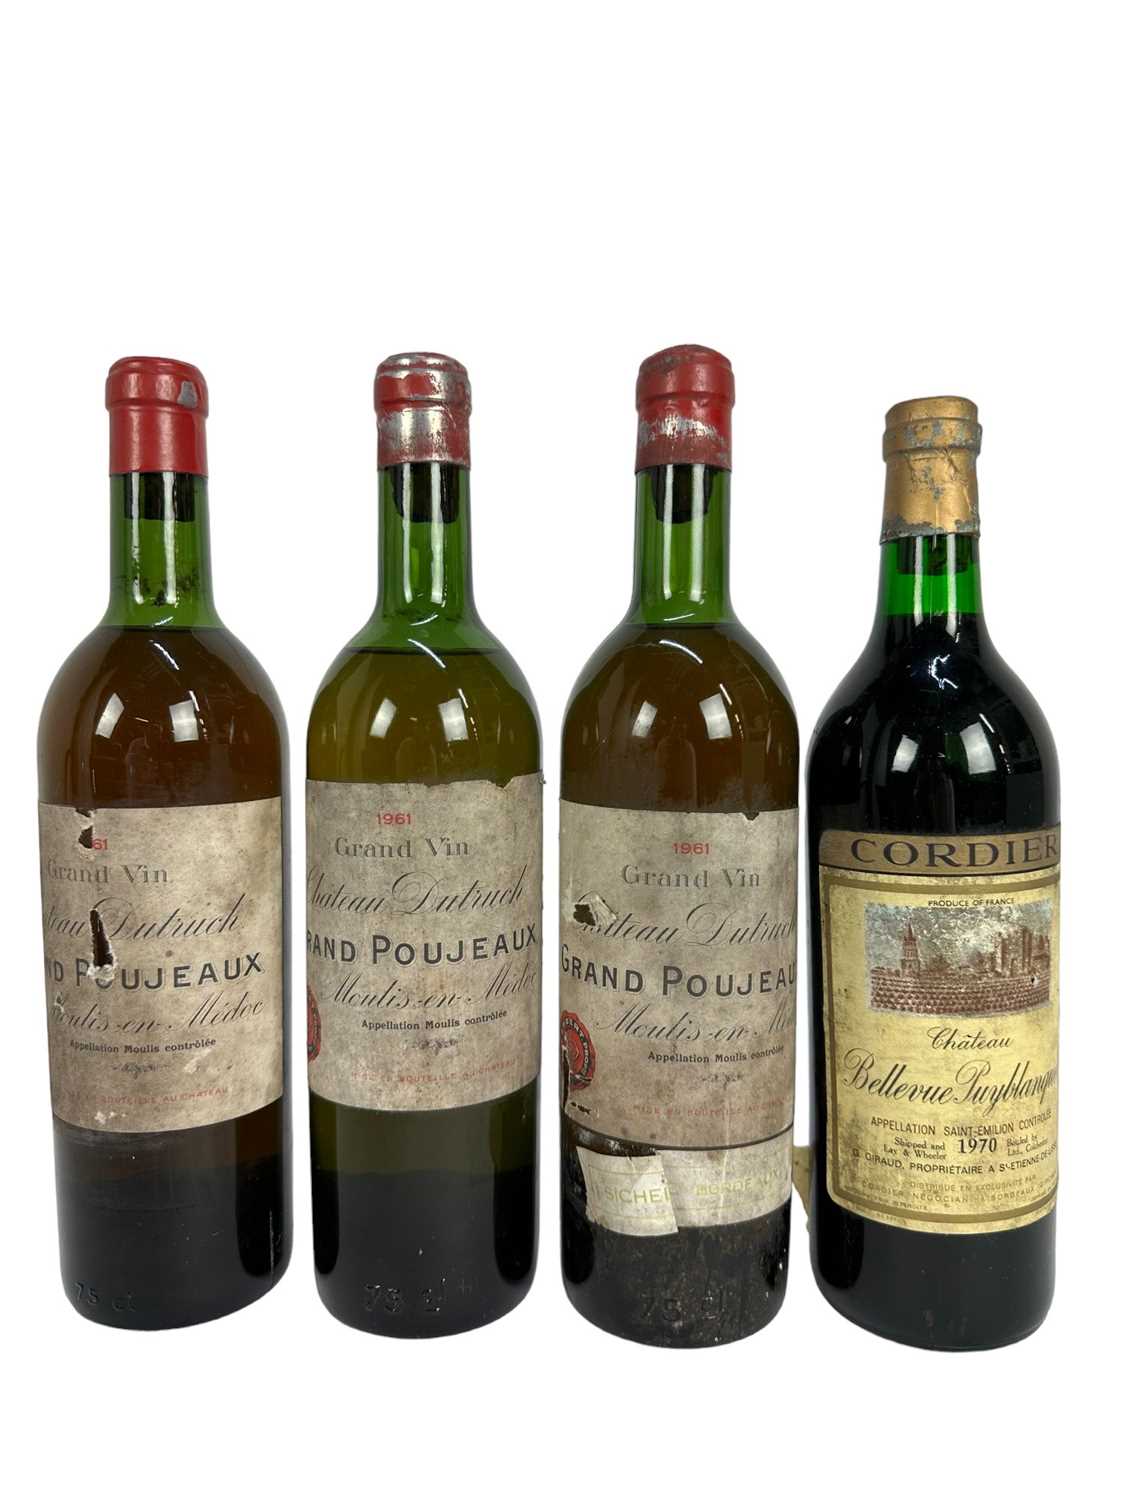 Lot 25 - Wine - four bottles, Chateau Dutruch Grand Poujeaux 1961 (3) and Chateau Bellevue Puyblanquet 1970